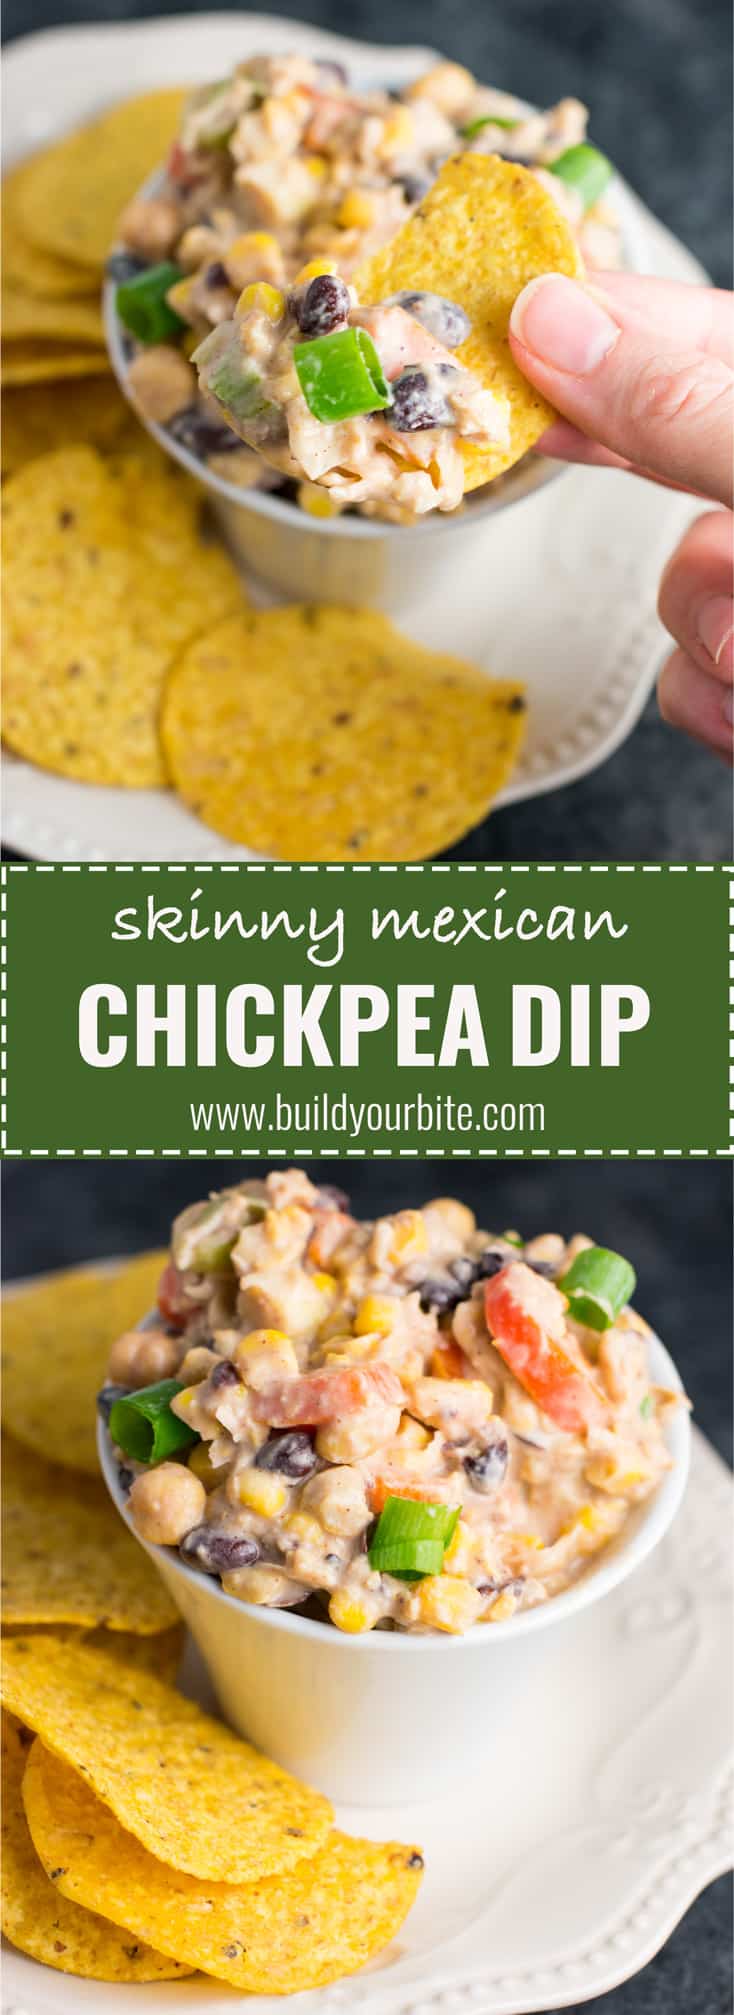 skinny mexican chickpea salad dip #appetizers #greekyogurt #chickpeasalad #chickpeadip